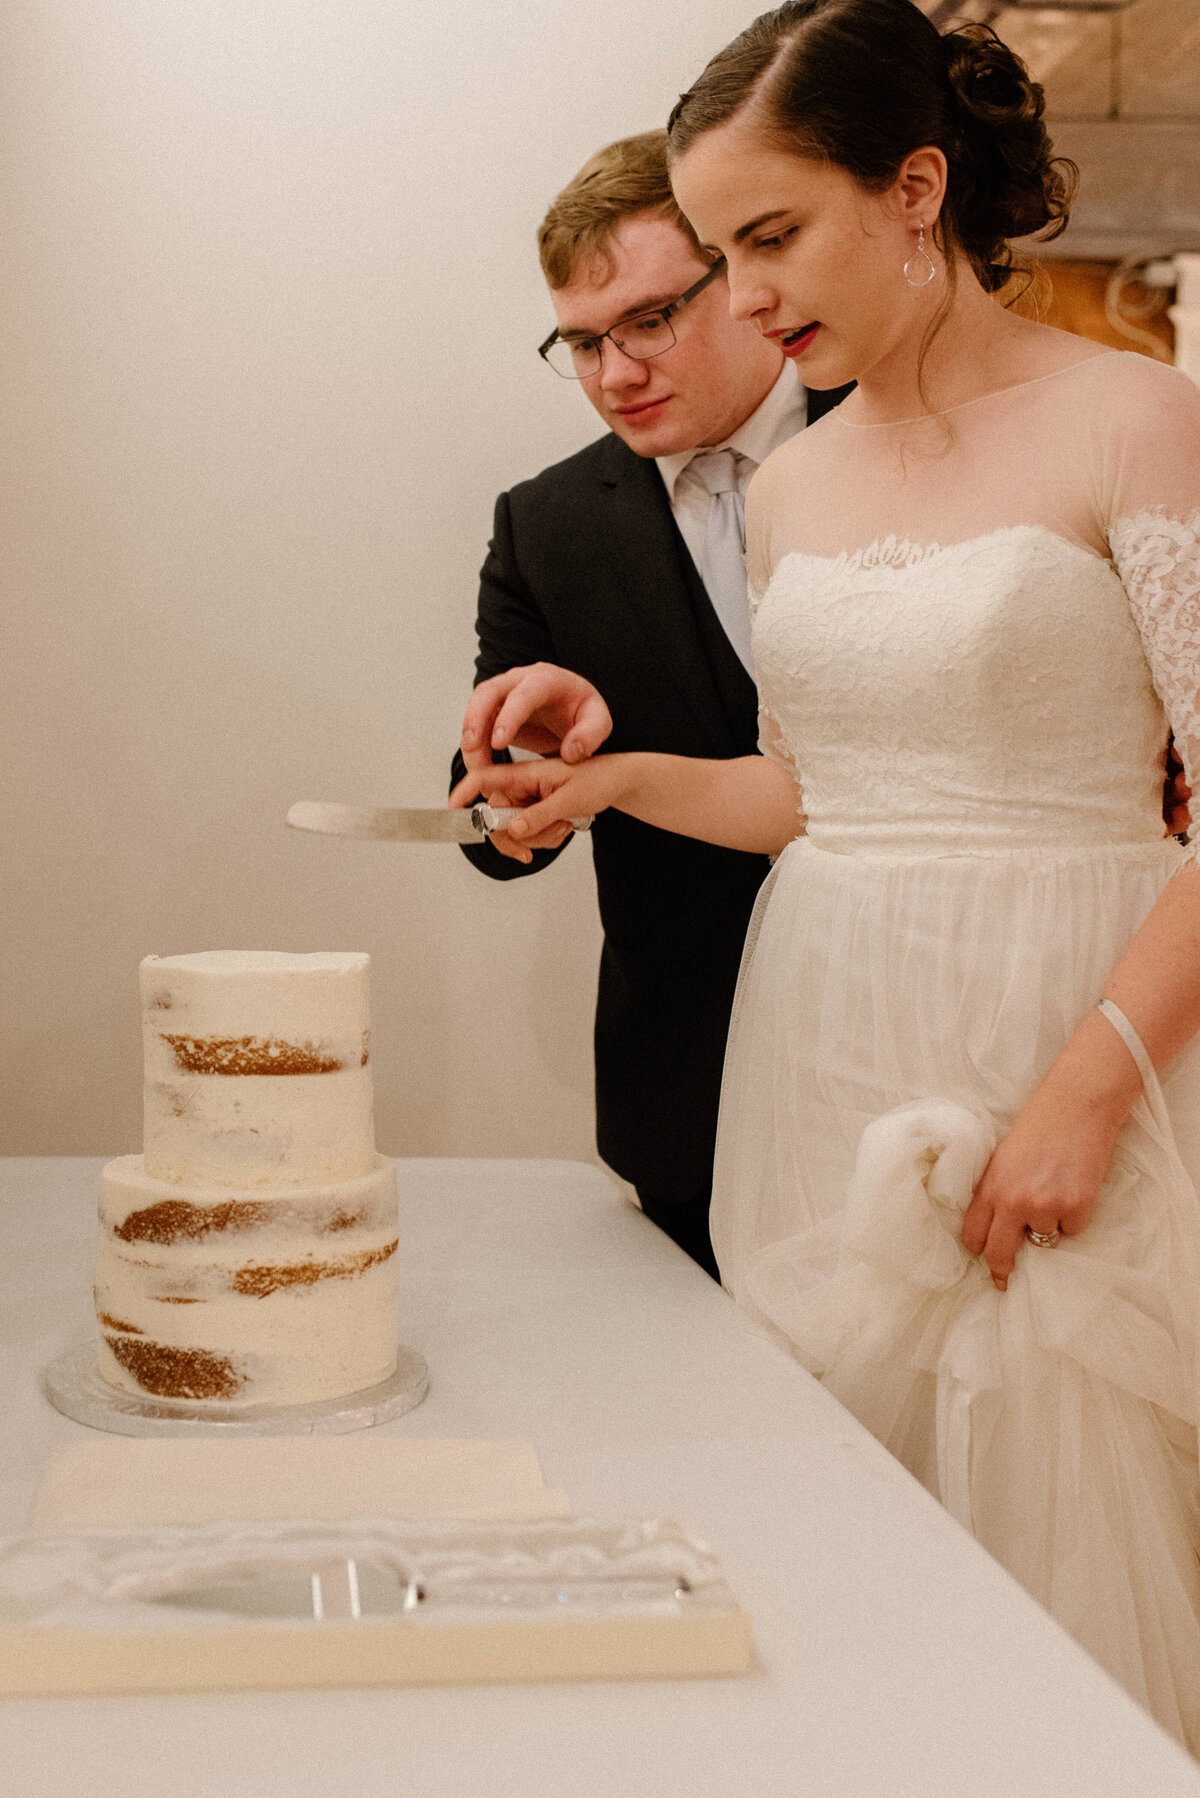 hamilton ontario spice factory wedding bride and groom cut cake together